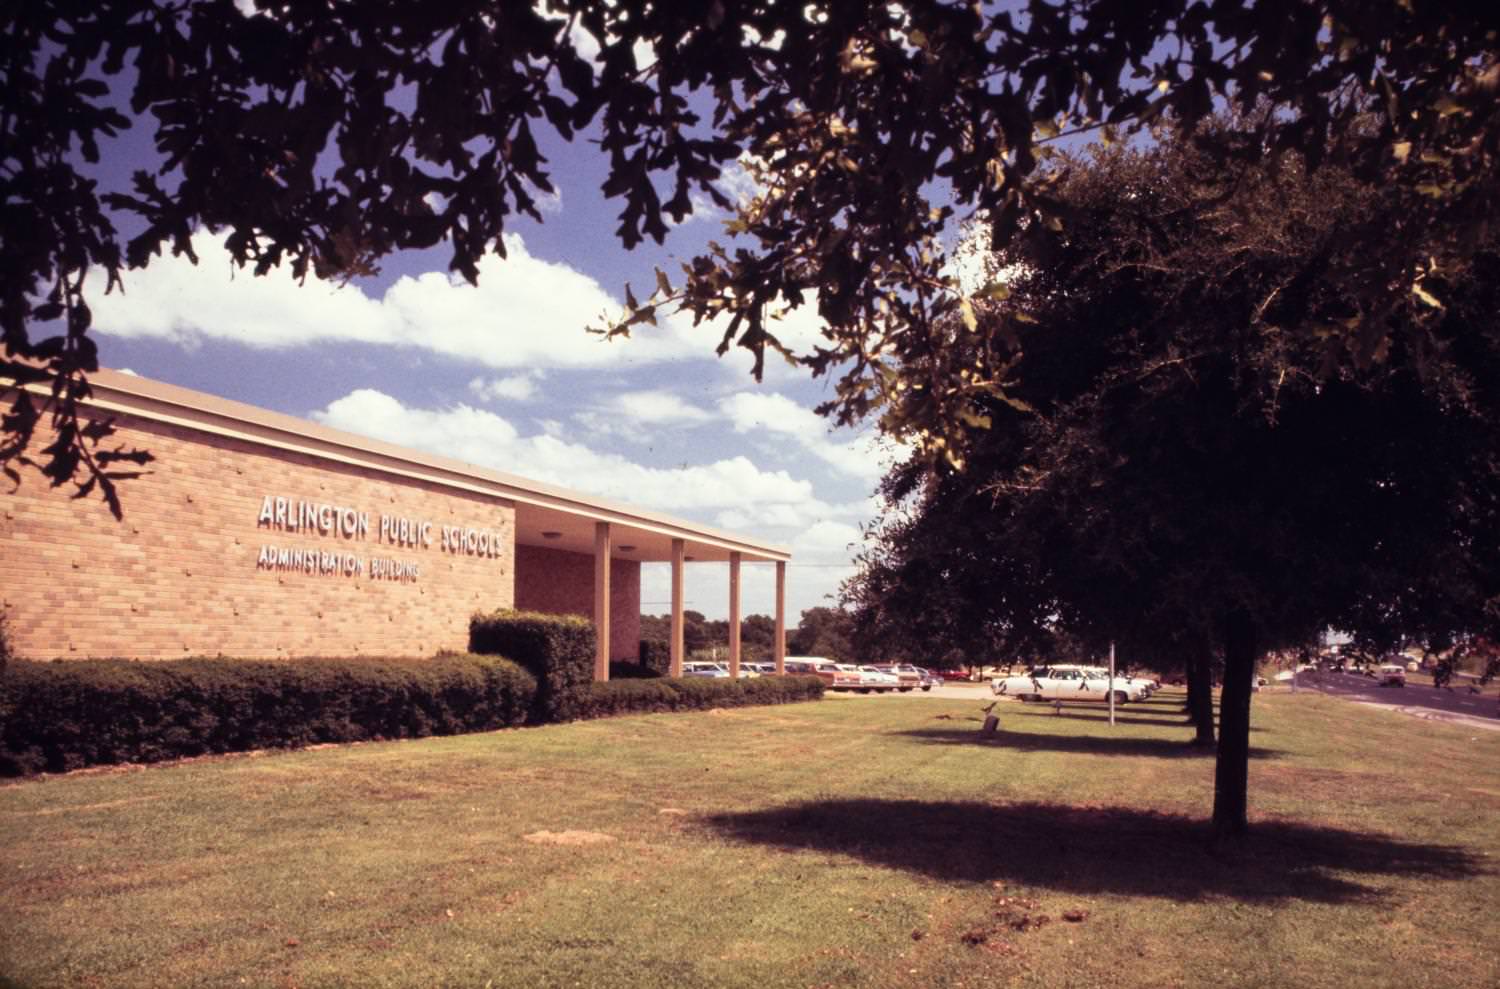 Arlington School Administration building, 1973